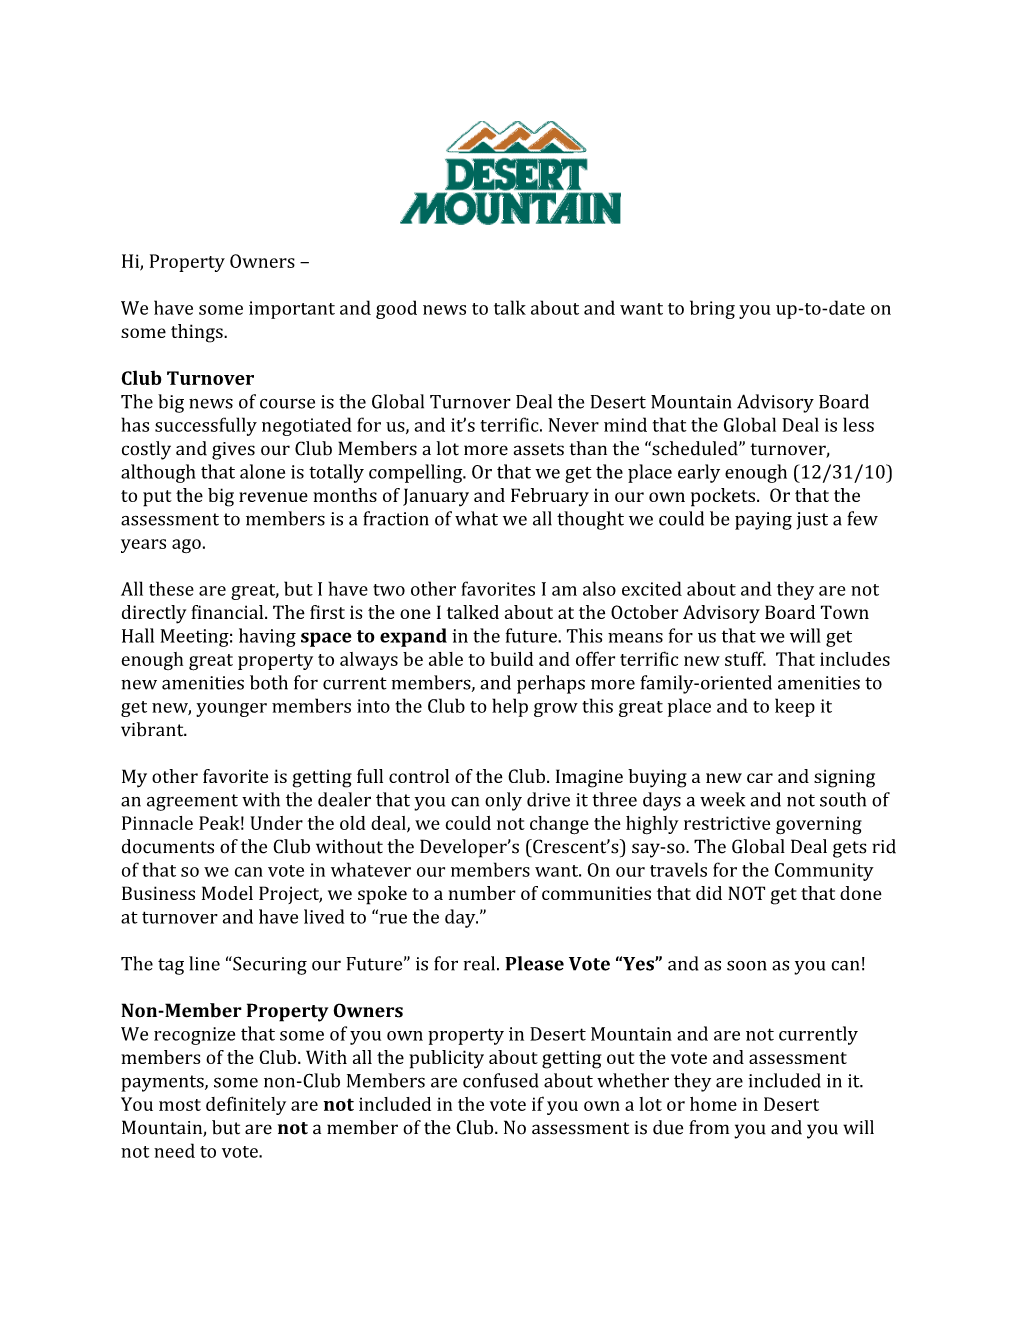 Desert Mountain Master Homeowners Association